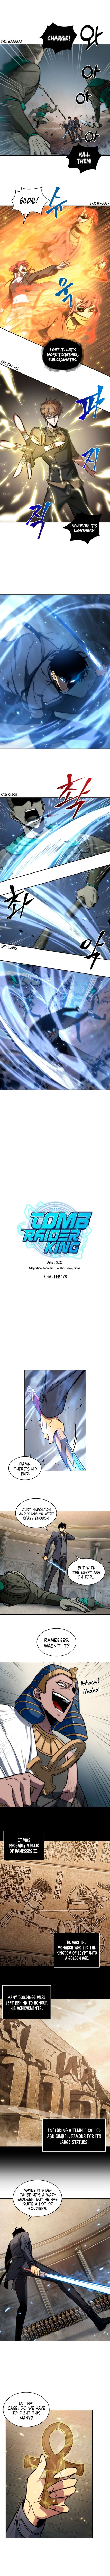 Tomb Raider King 178 1